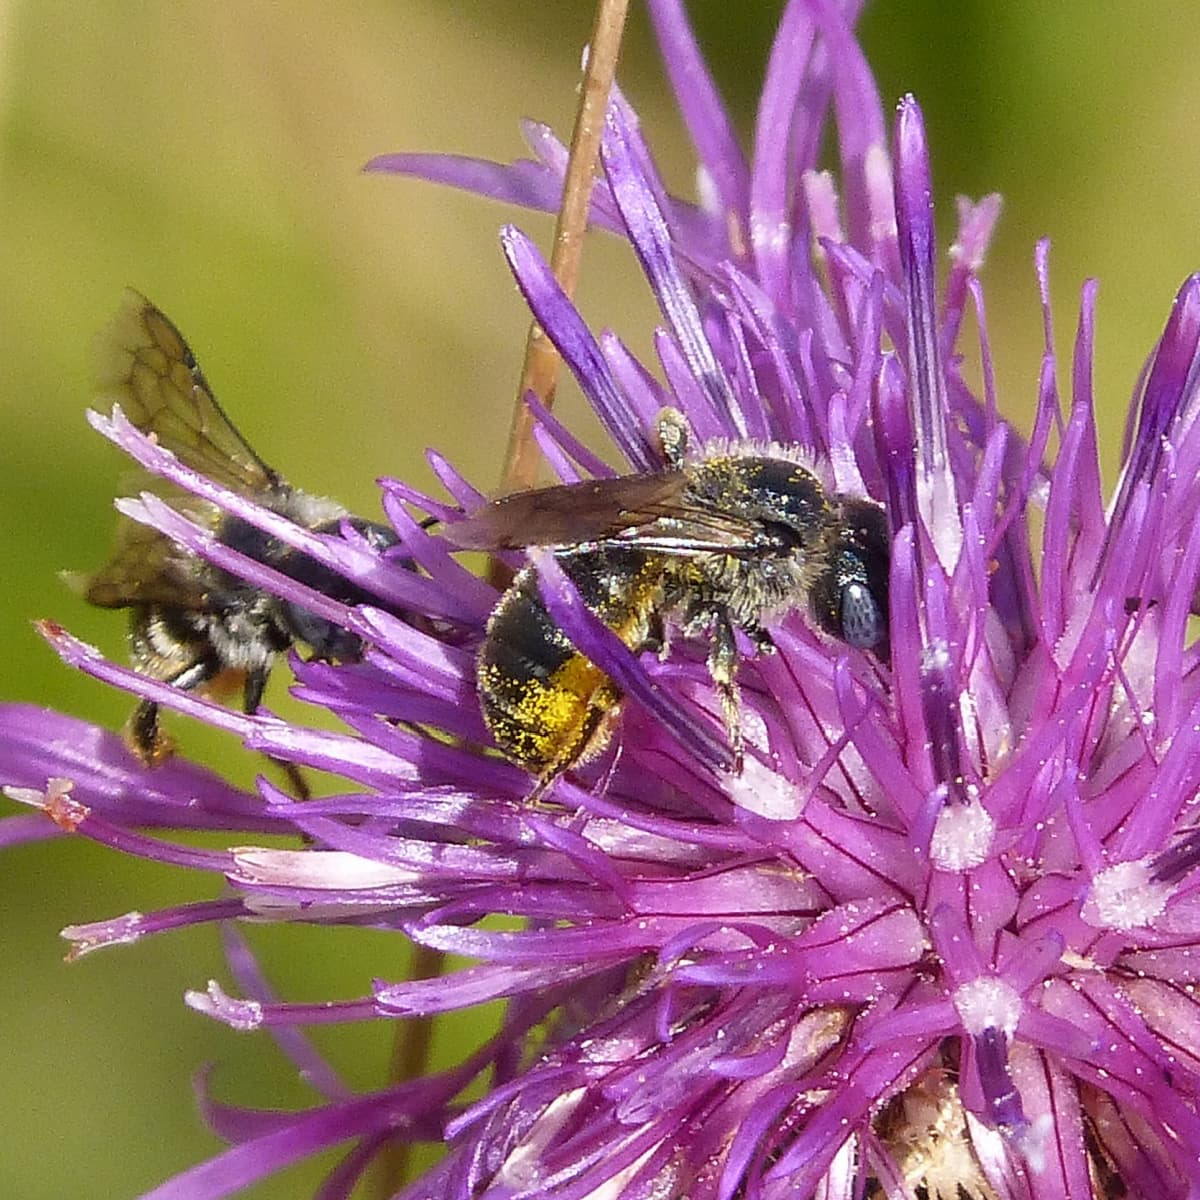 Mason bee in a fushia colored flower. Pollen on his legs.